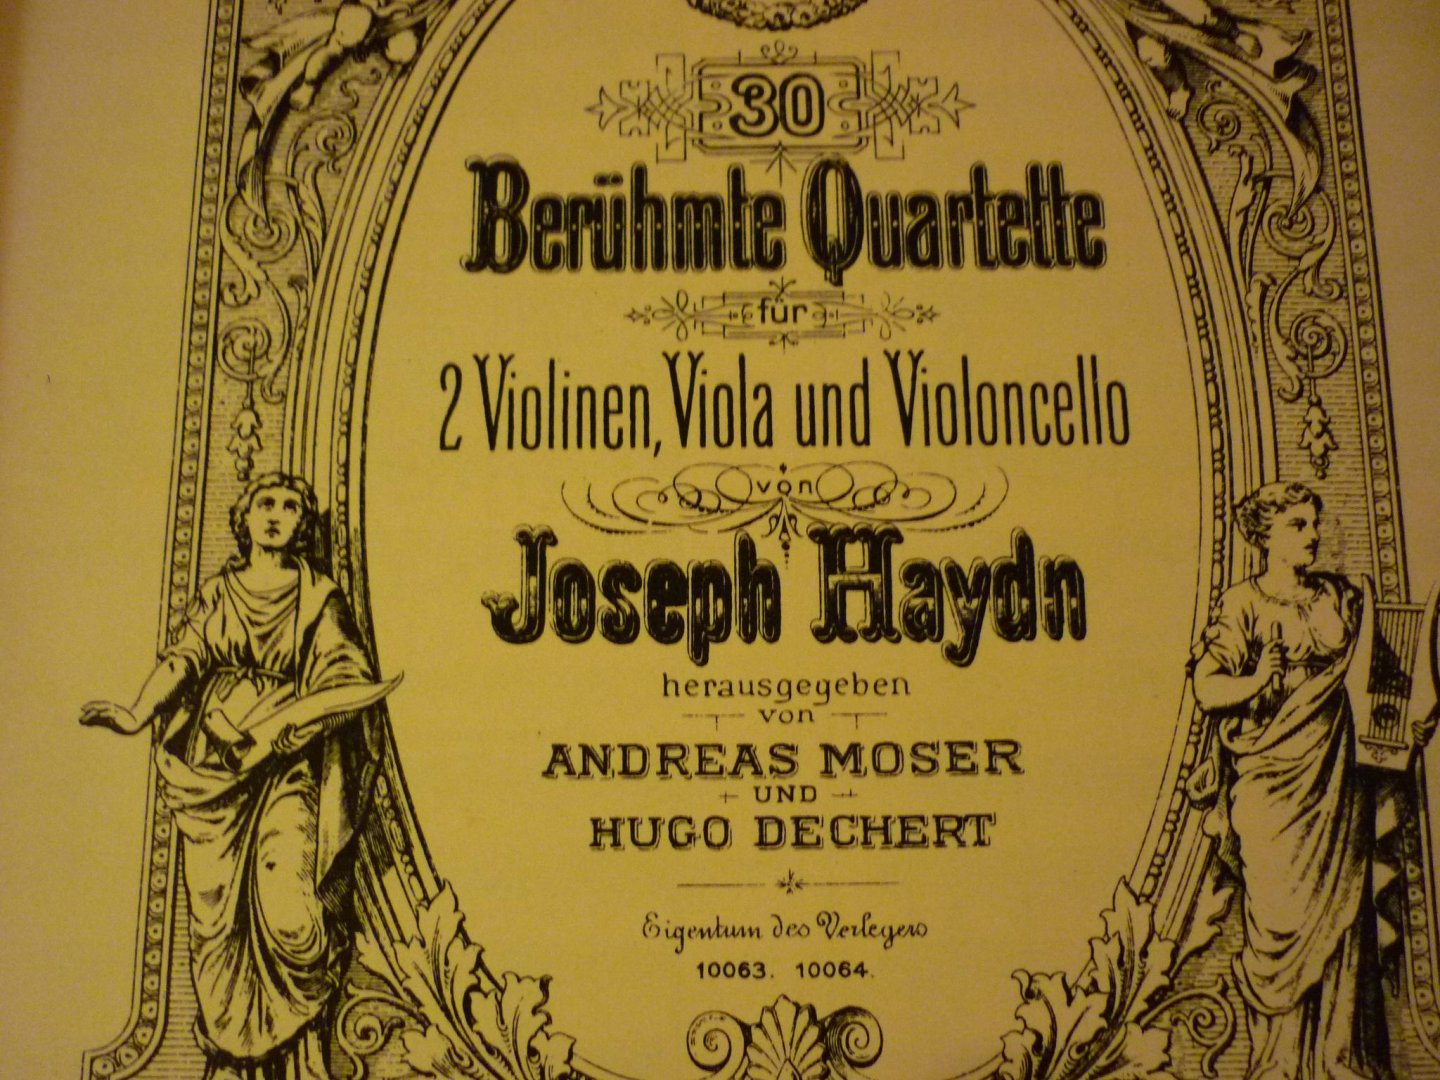 Haydn; Franz Joseph (1732-1809) - 30 beruhmte Quartette (Band II: Quartett XV t/m XXX); 2 violinen, viola und violoncello